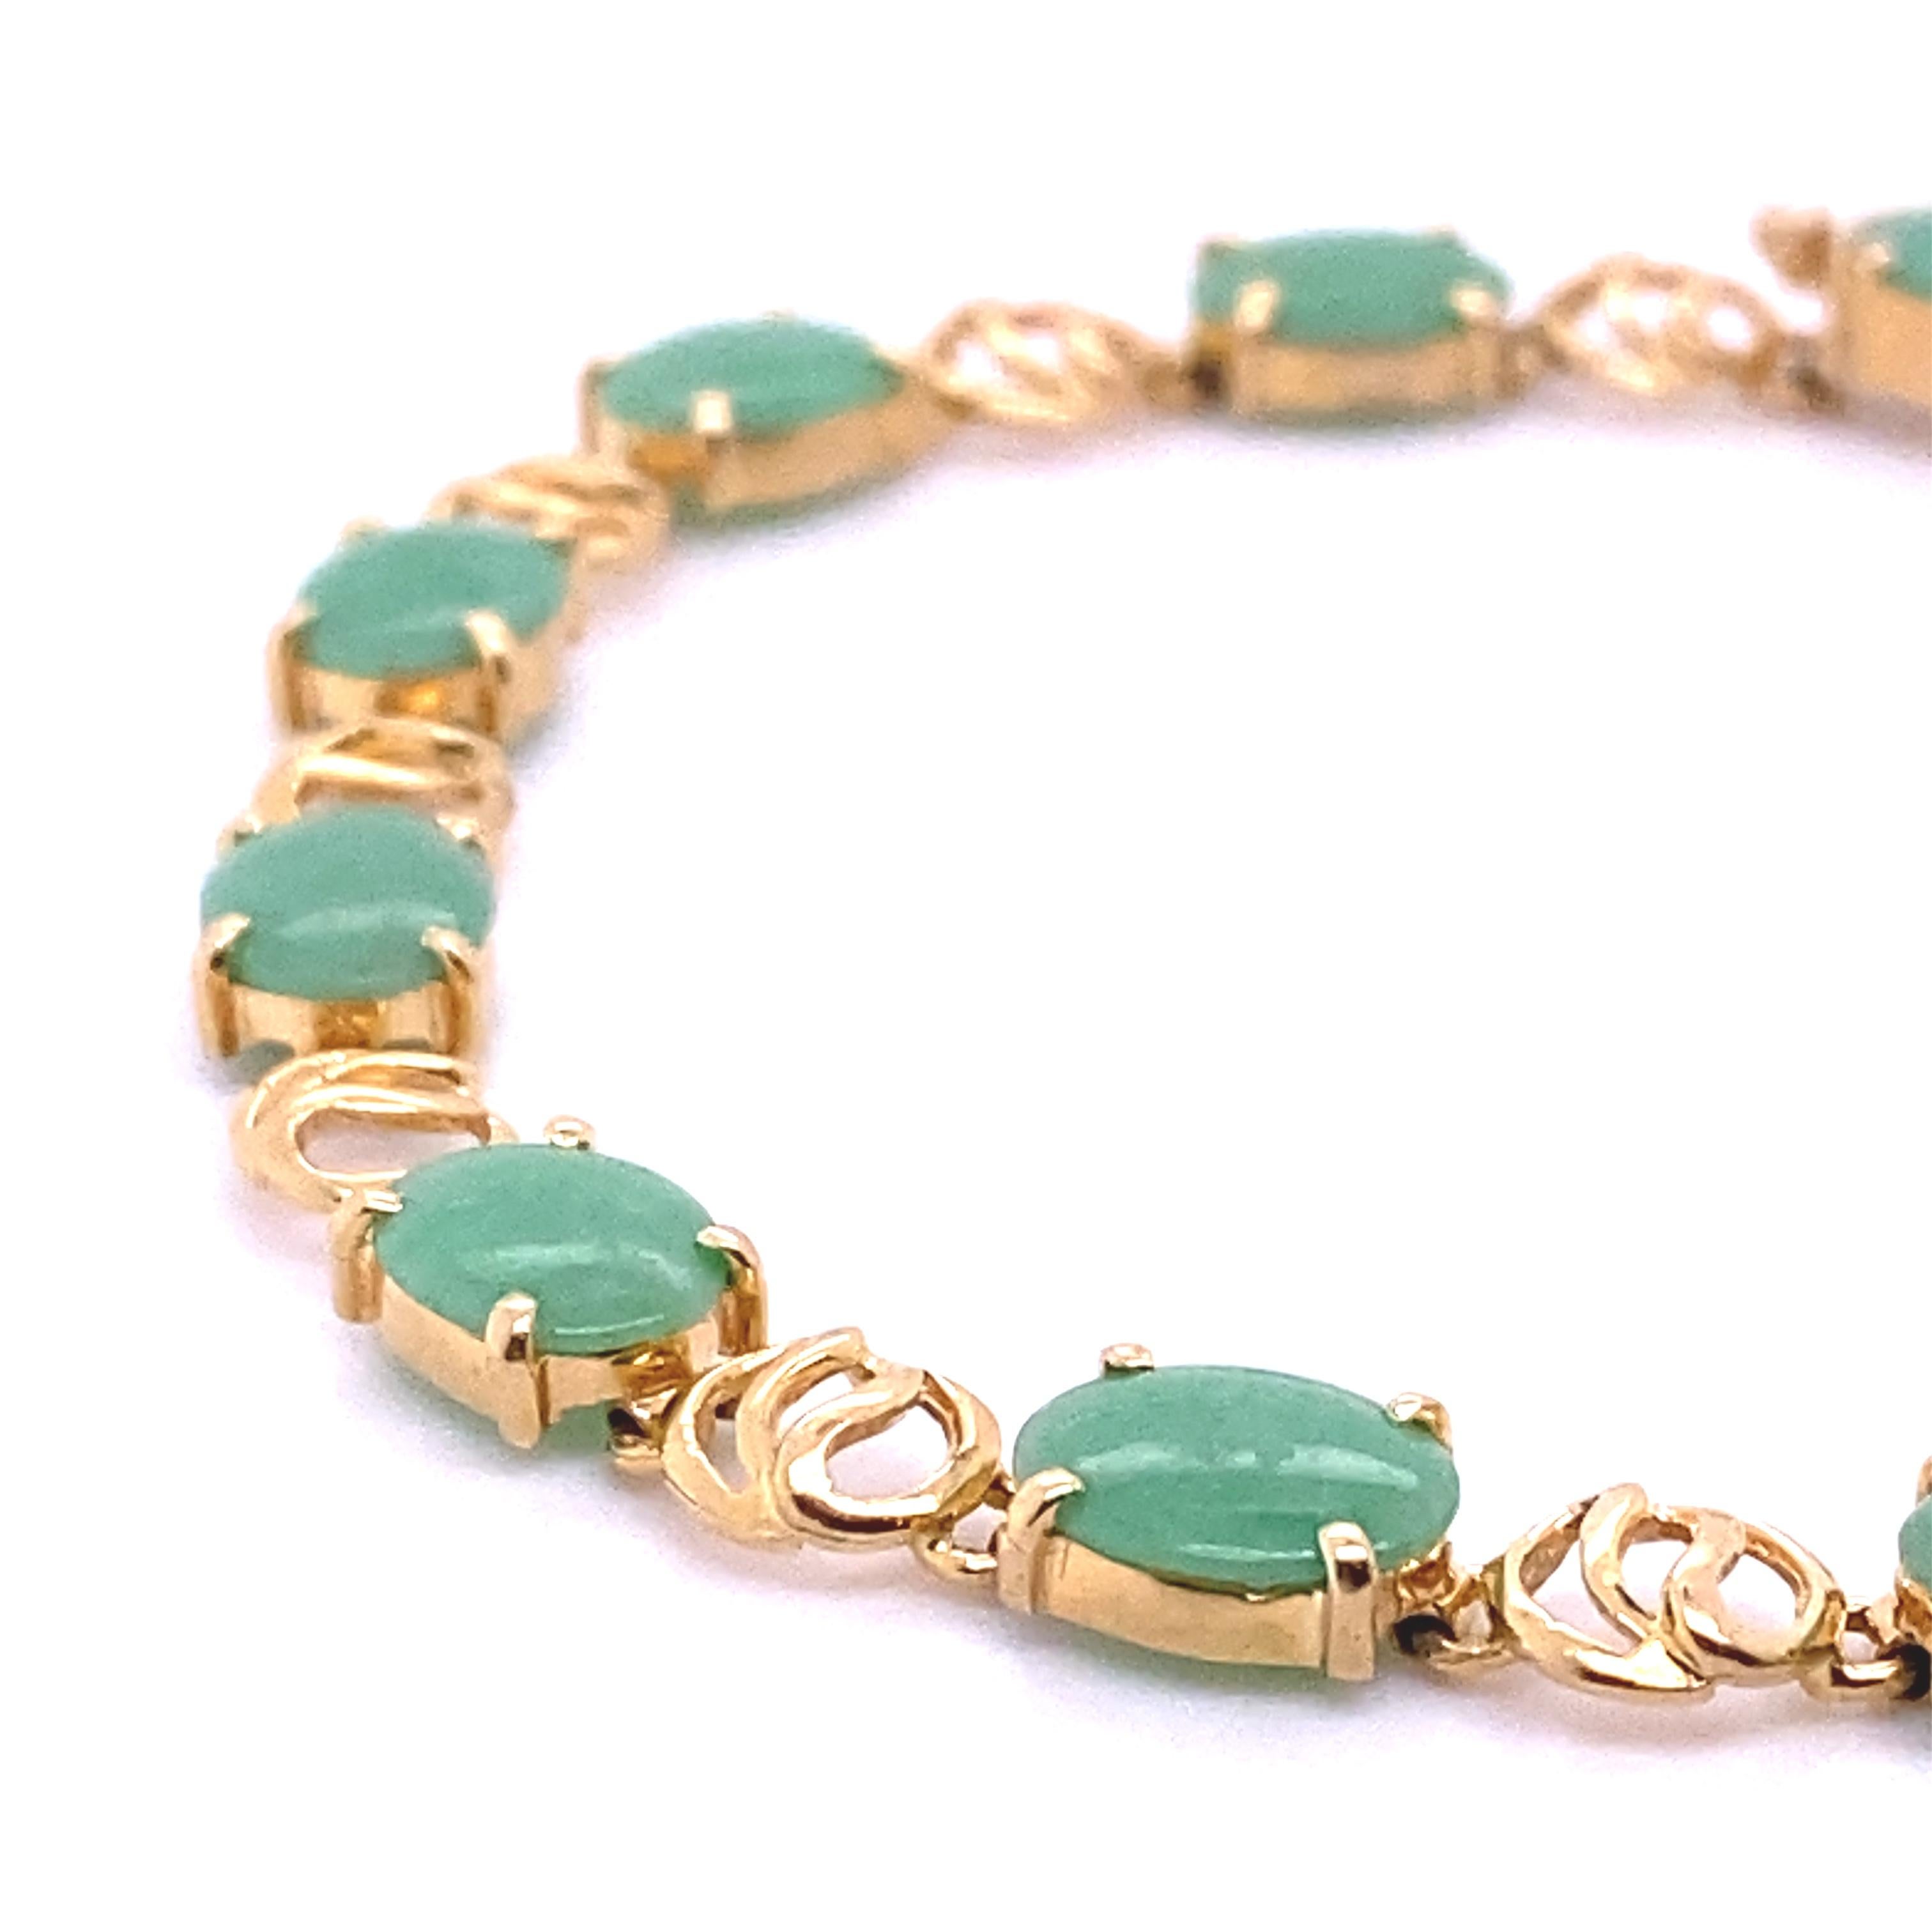 jade bangle bracelet with gold clasp